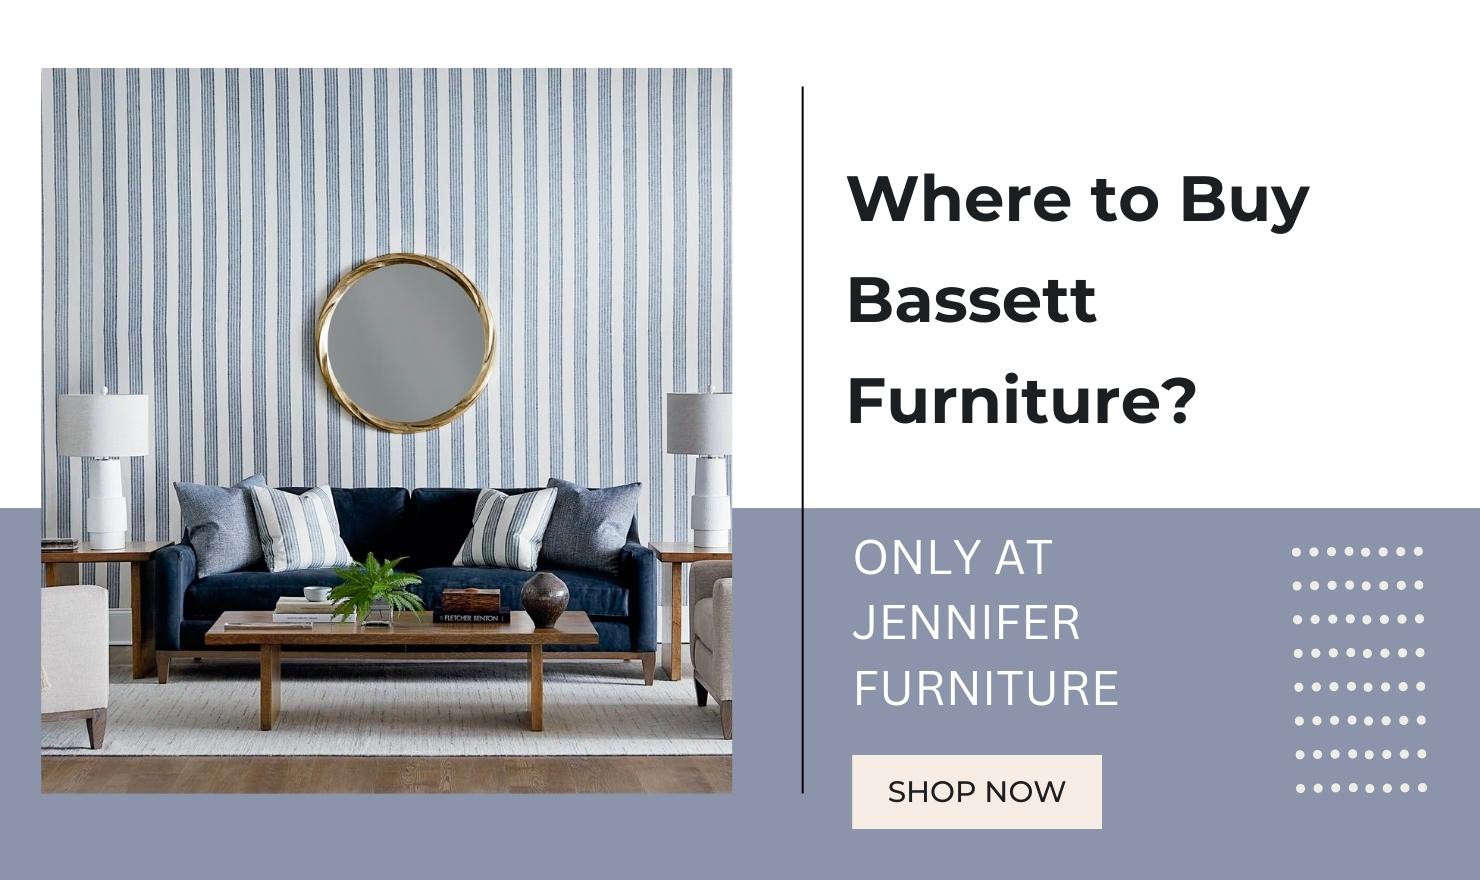 Where to Buy Bassett Furniture